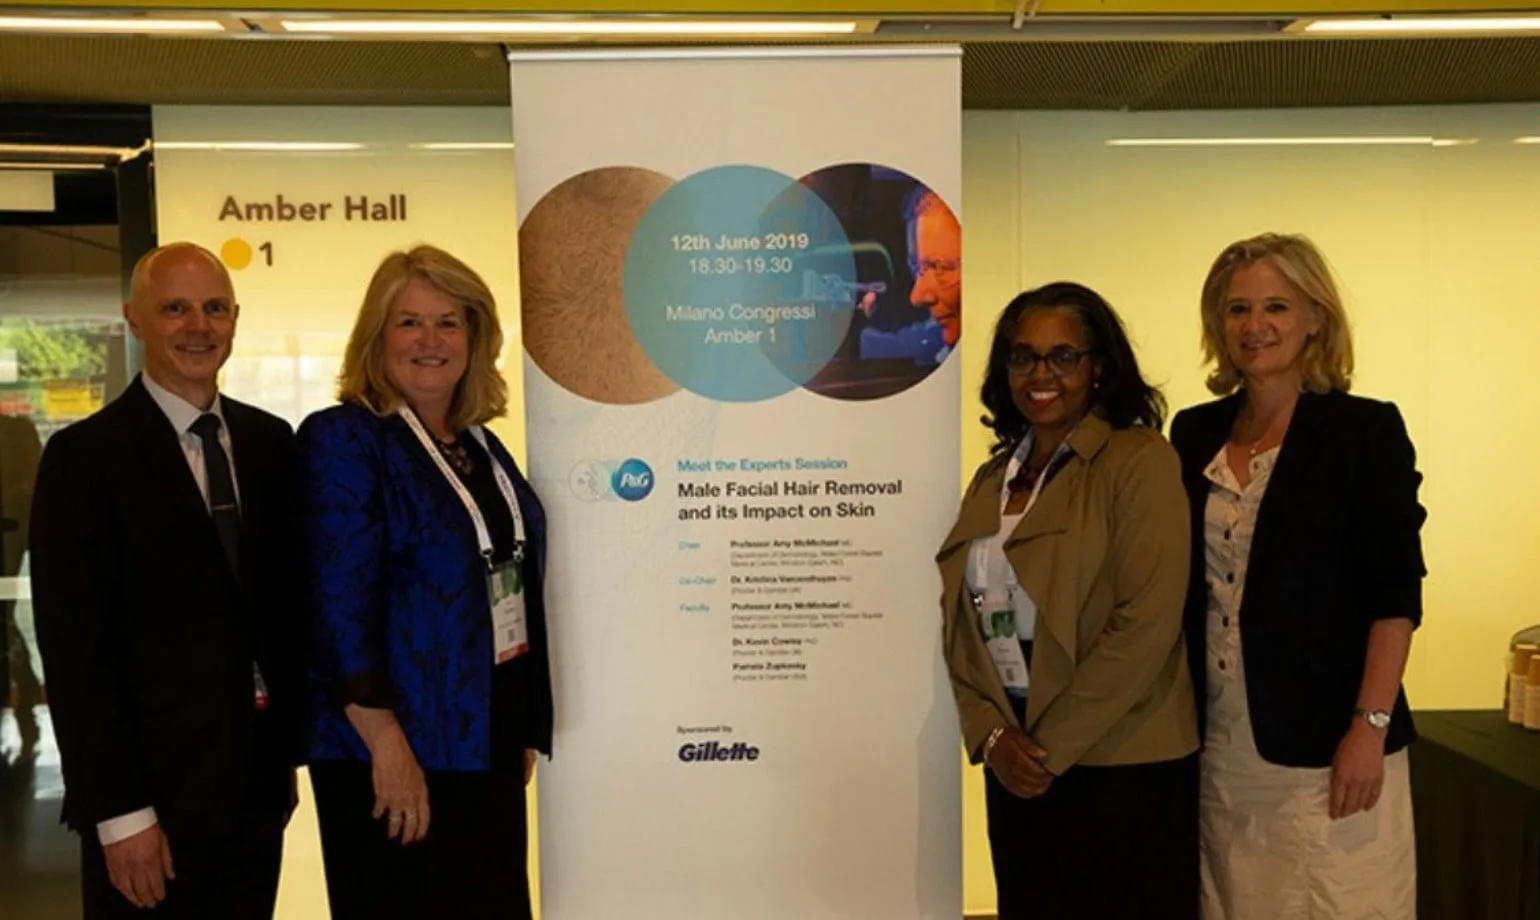 Gillette nimmt bereits zum dritten Mal am Weltkongress der Dermatologie teil